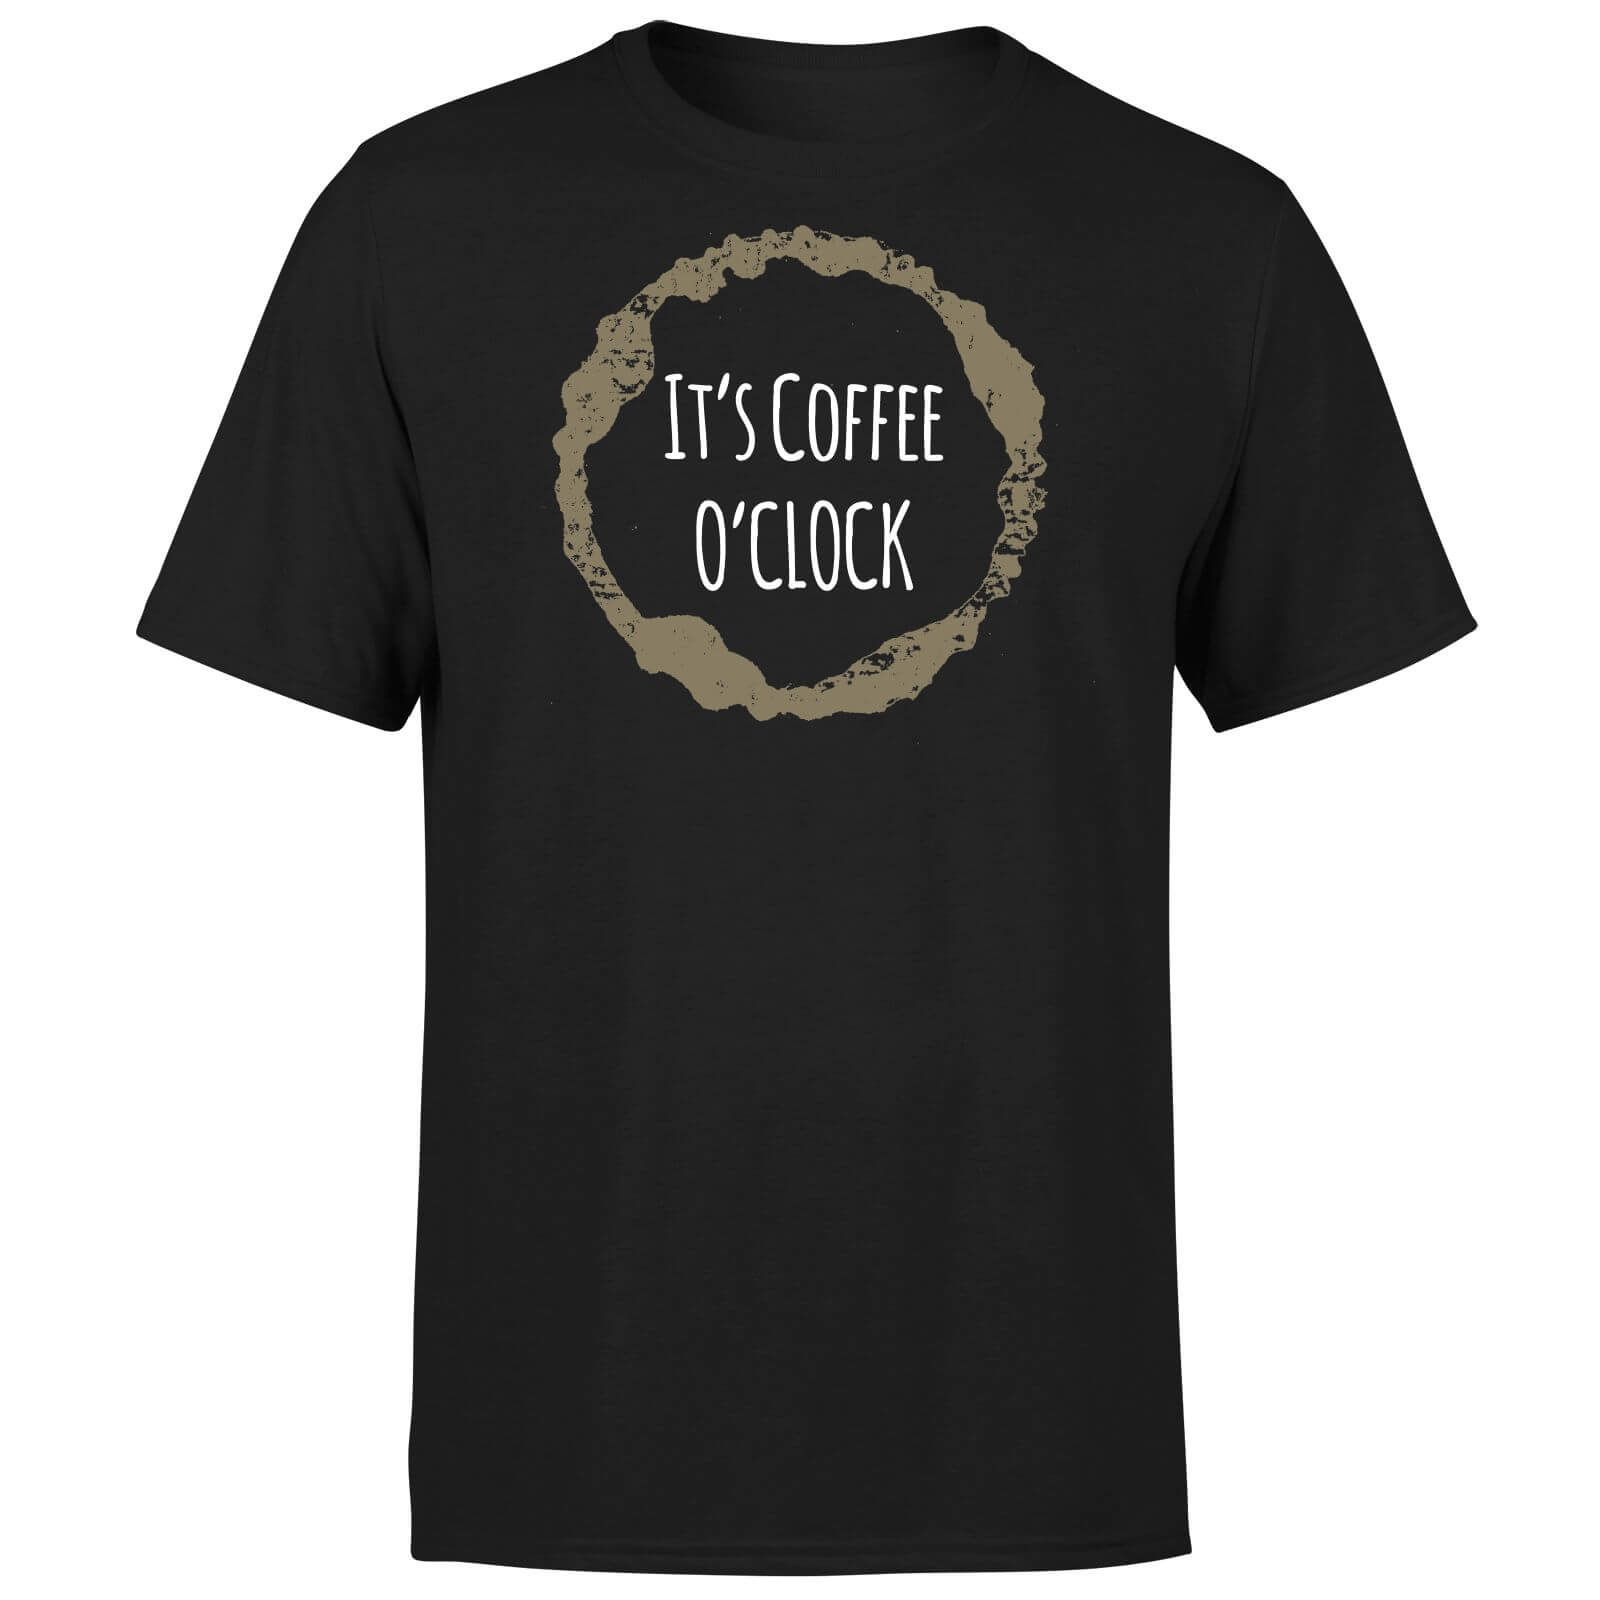 It's Coffee O'Clock T-Shirt - Black - S - Black